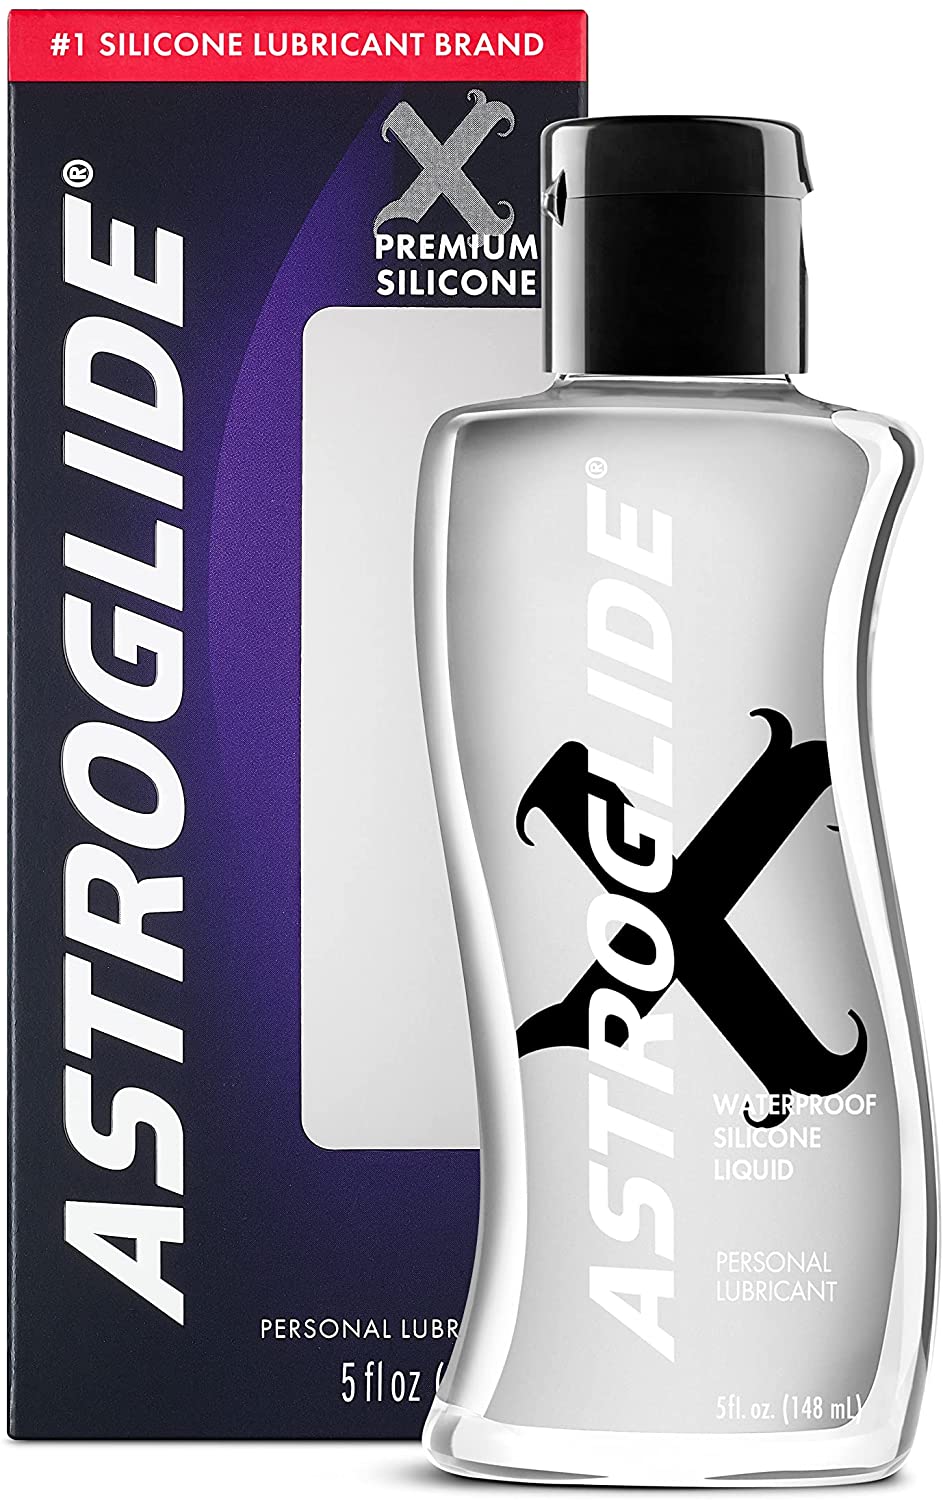 Astroglide X Silicone Based Sex Lube